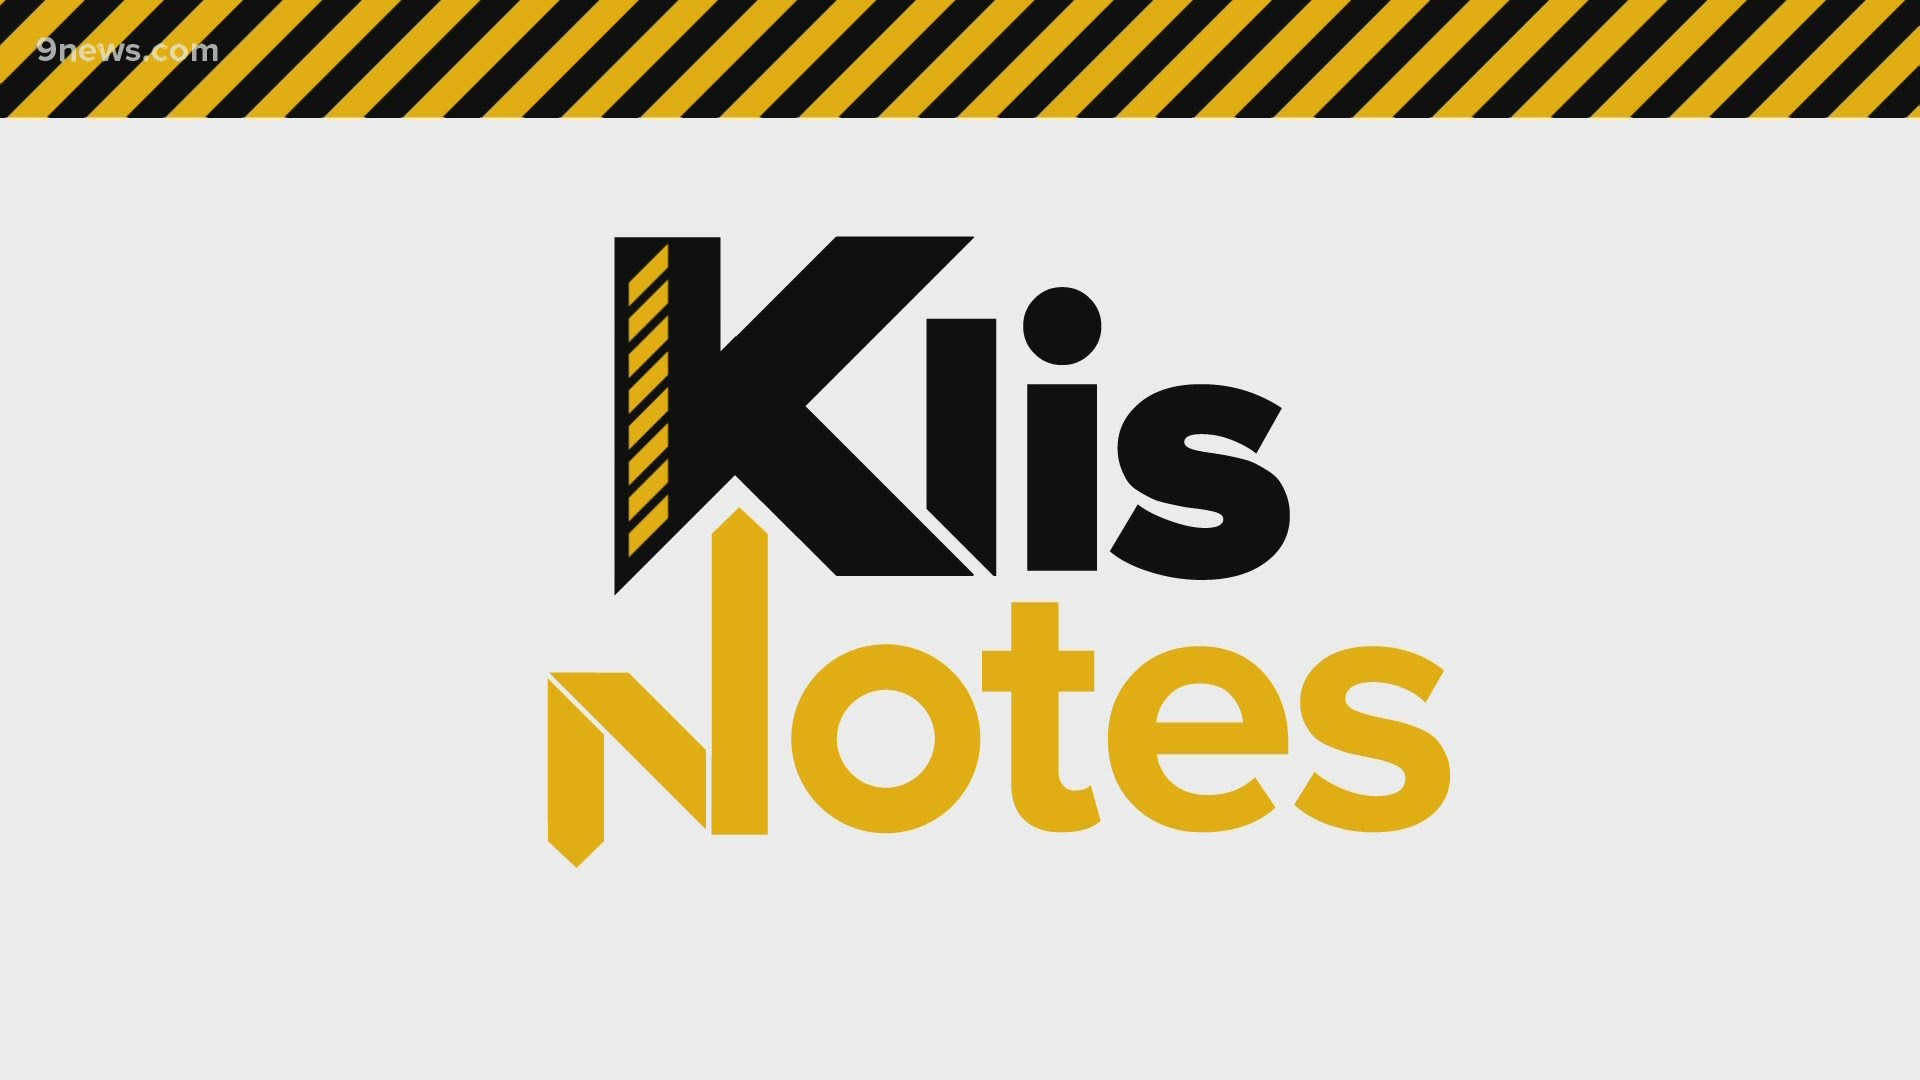 9NEWS insider Mike Klis breaks down 5 keys the Broncos must do to stay winning against the Saints in Week 12.